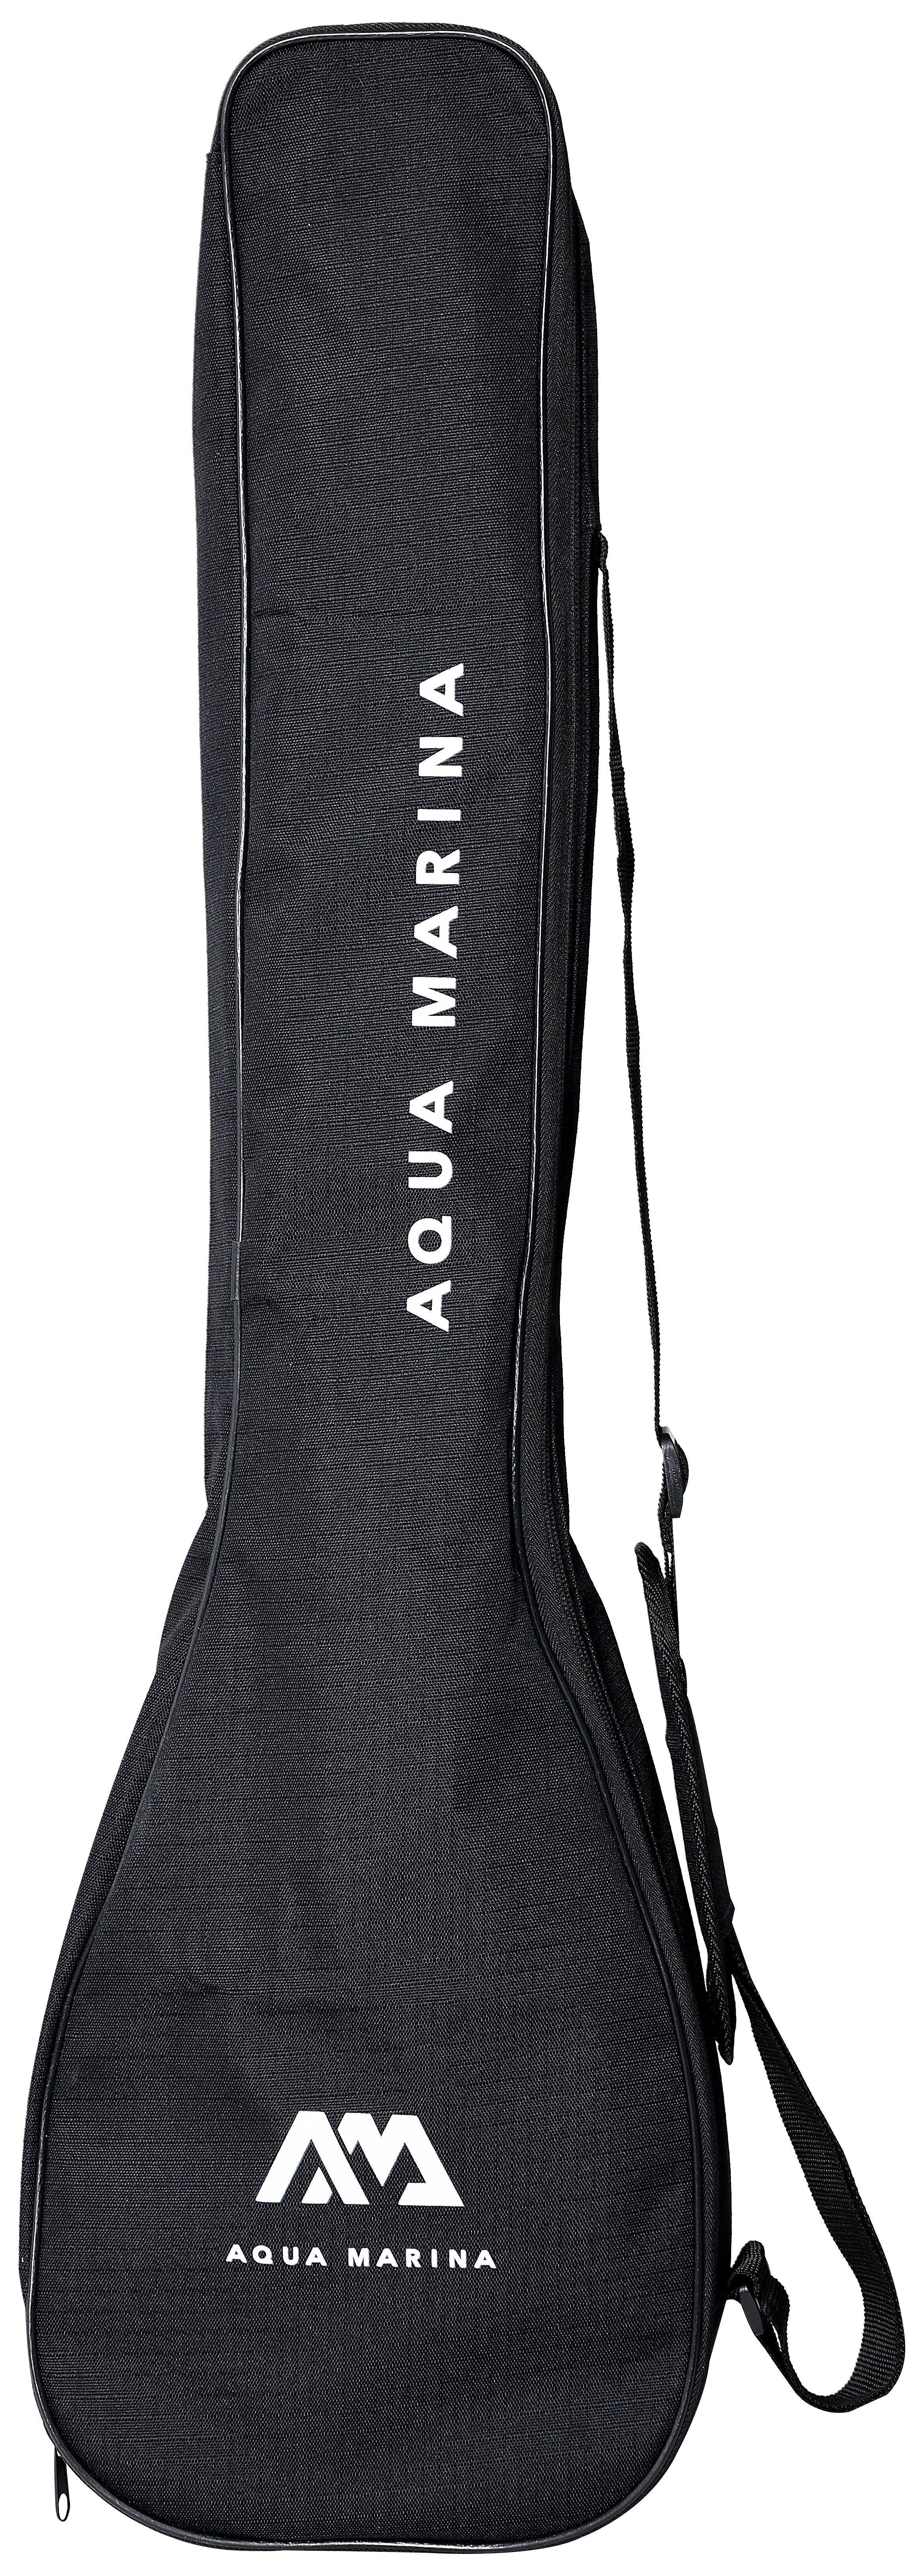 Aqua Marina Paddle Bag - Dti Direct USA